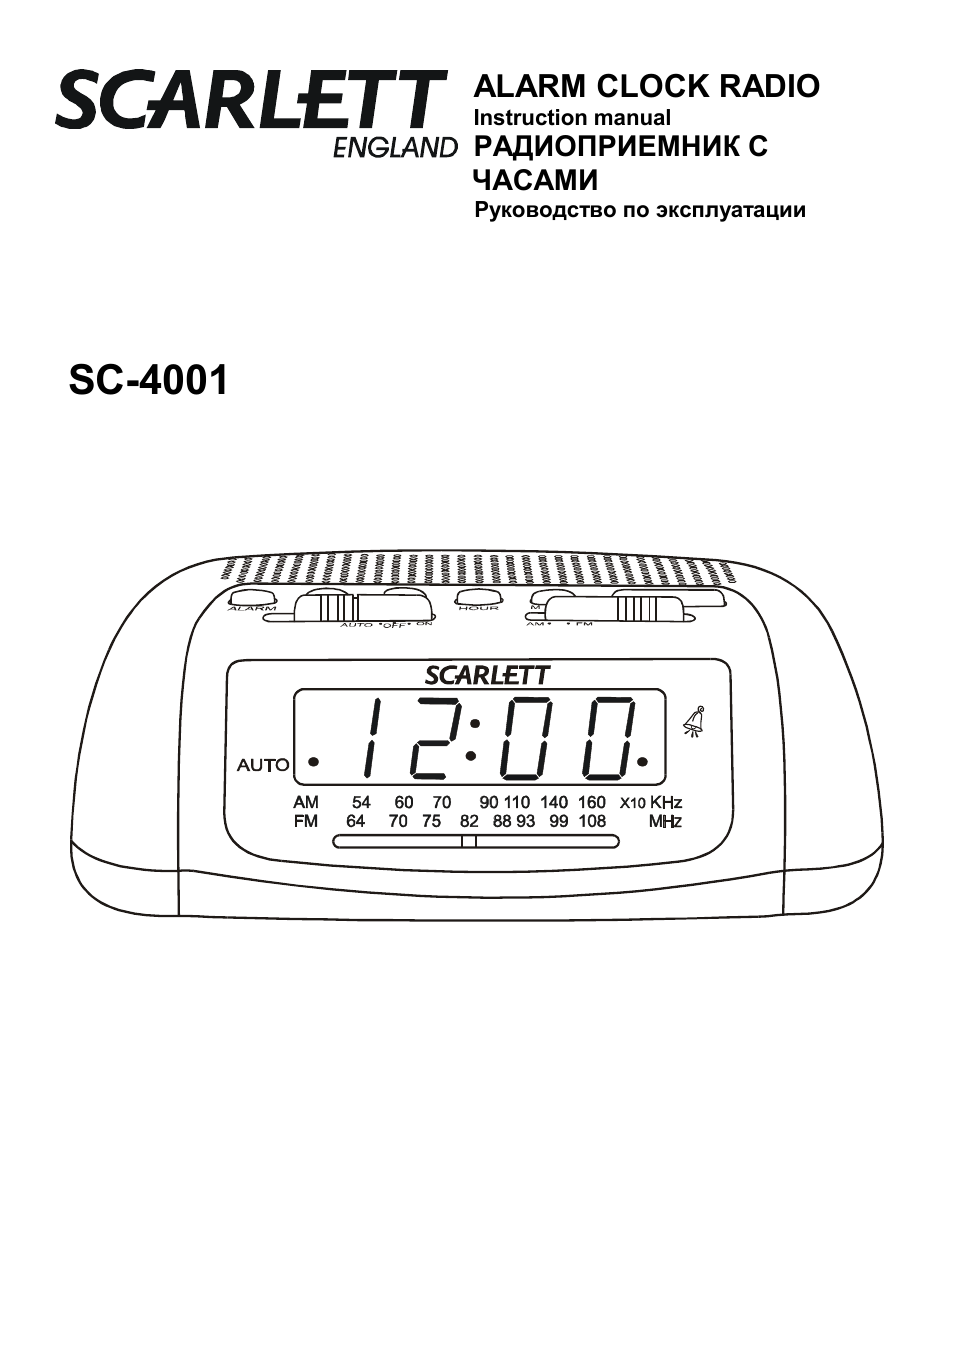 SC-4001